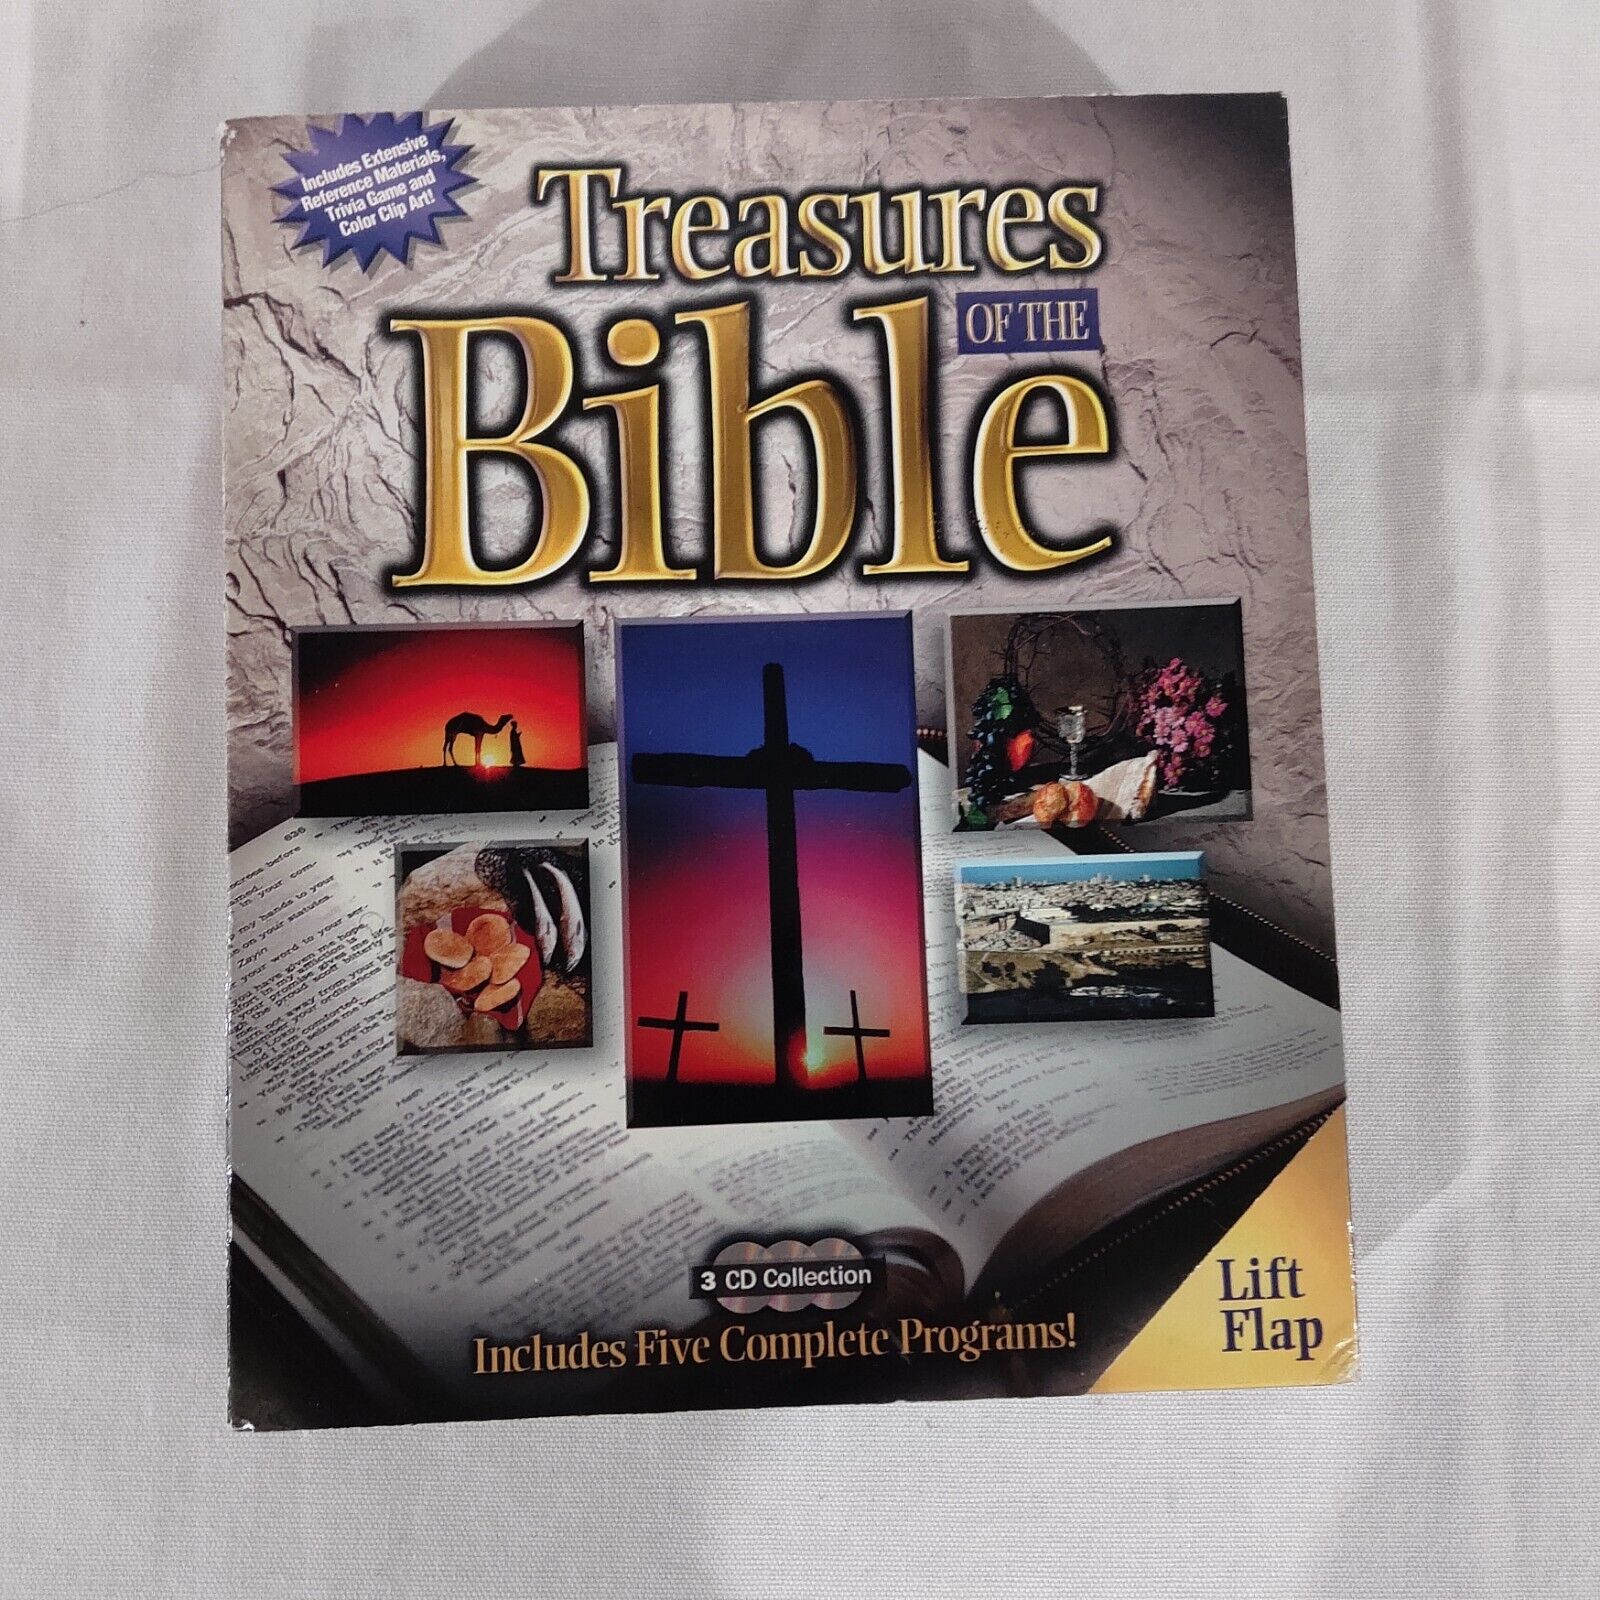 Treasures of the Bible CD Windows/Mac Counter Top